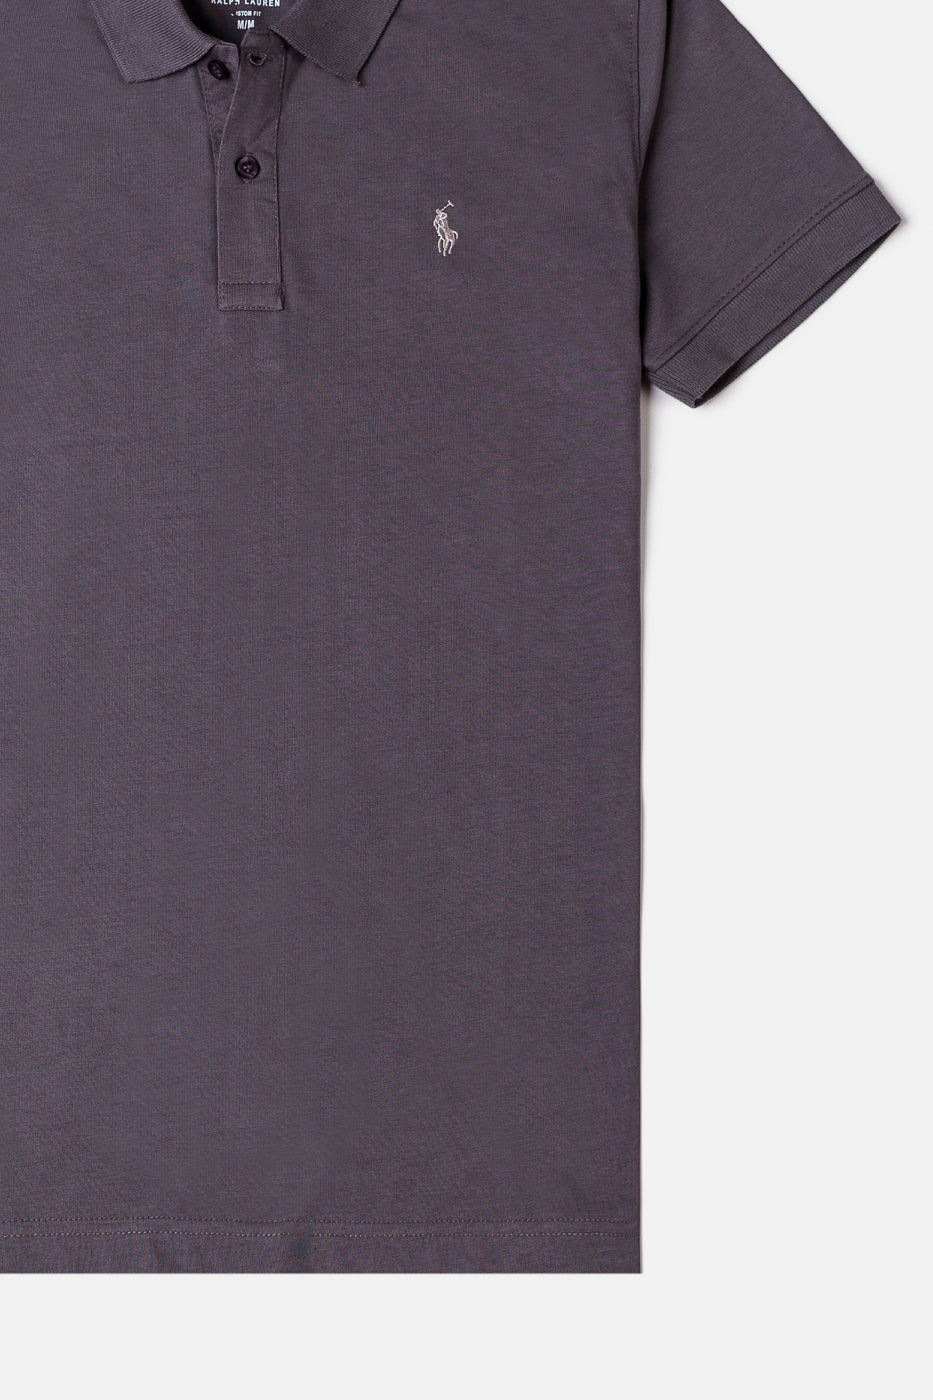 RL Premium Imported Polo Shirt - Stone Grey